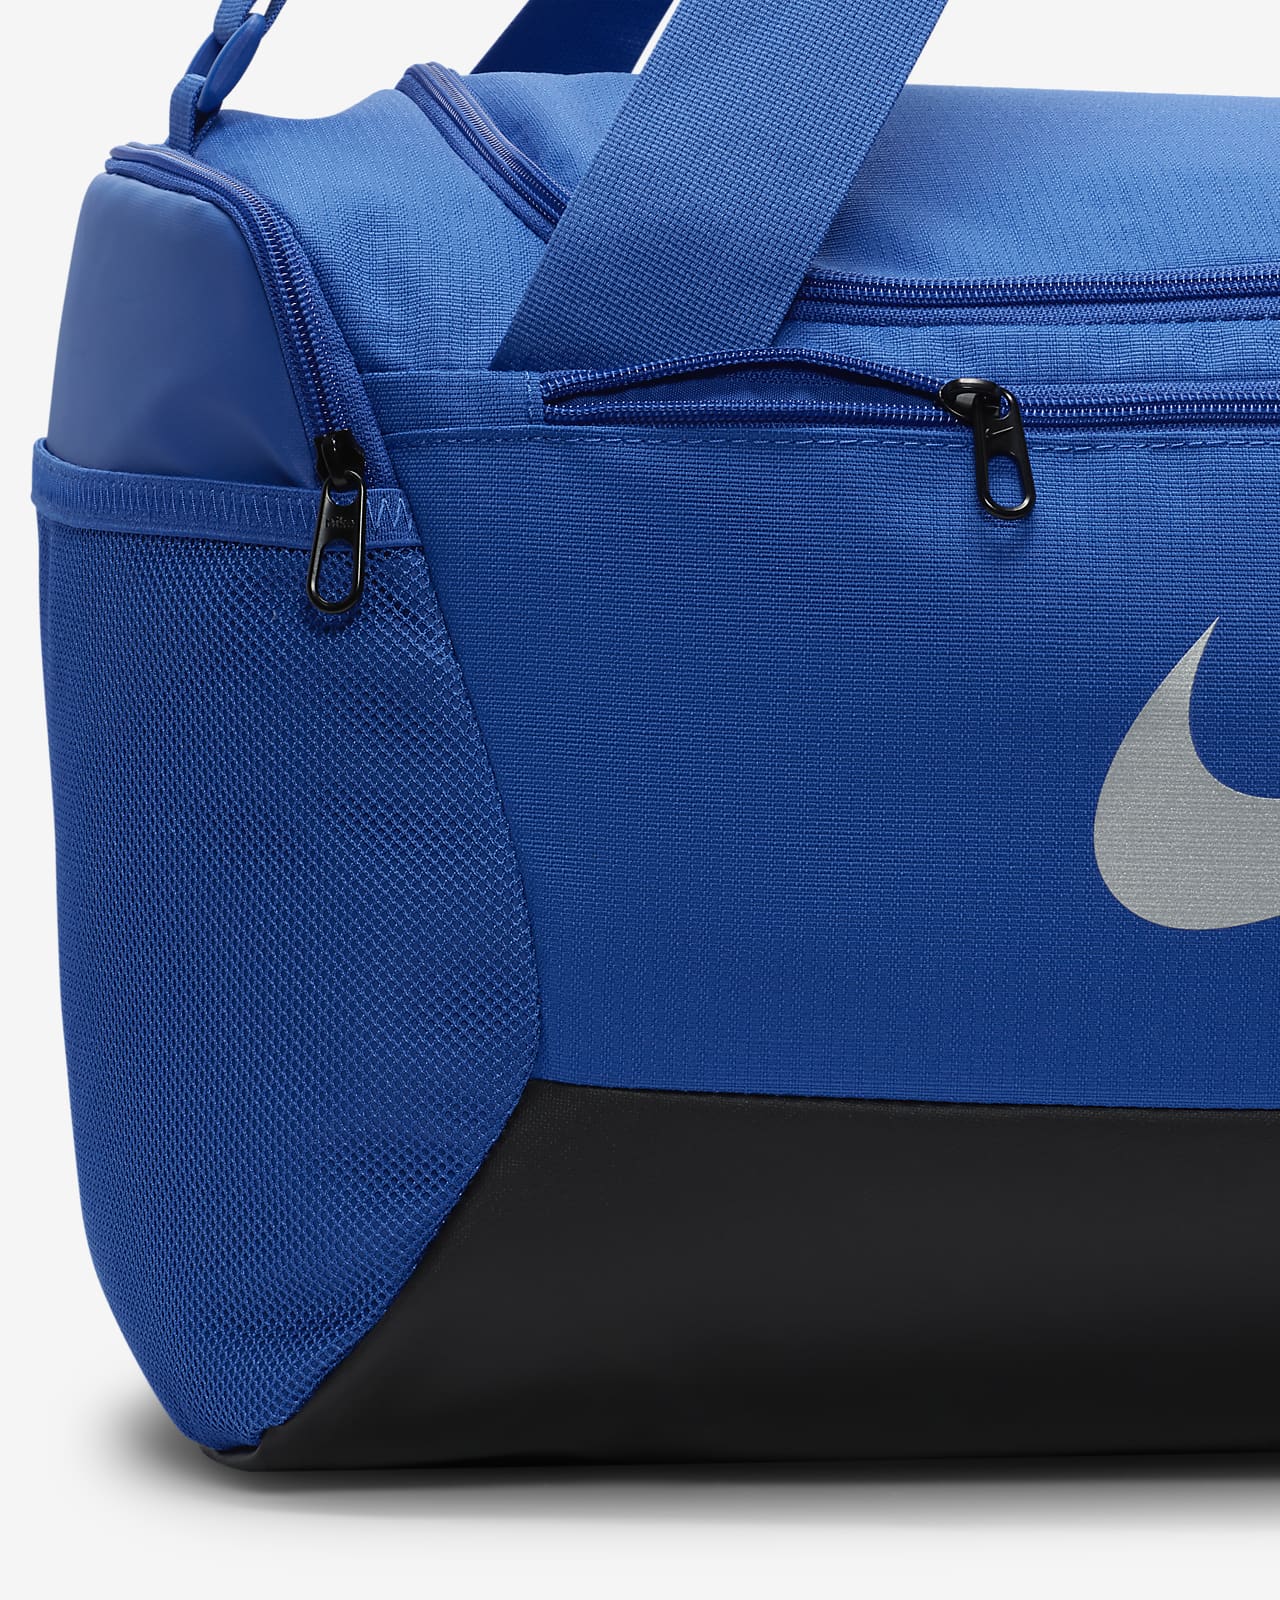 Nike Brasilia 9.5 Training Duffel Bag (Small, 41L). Nike CZ